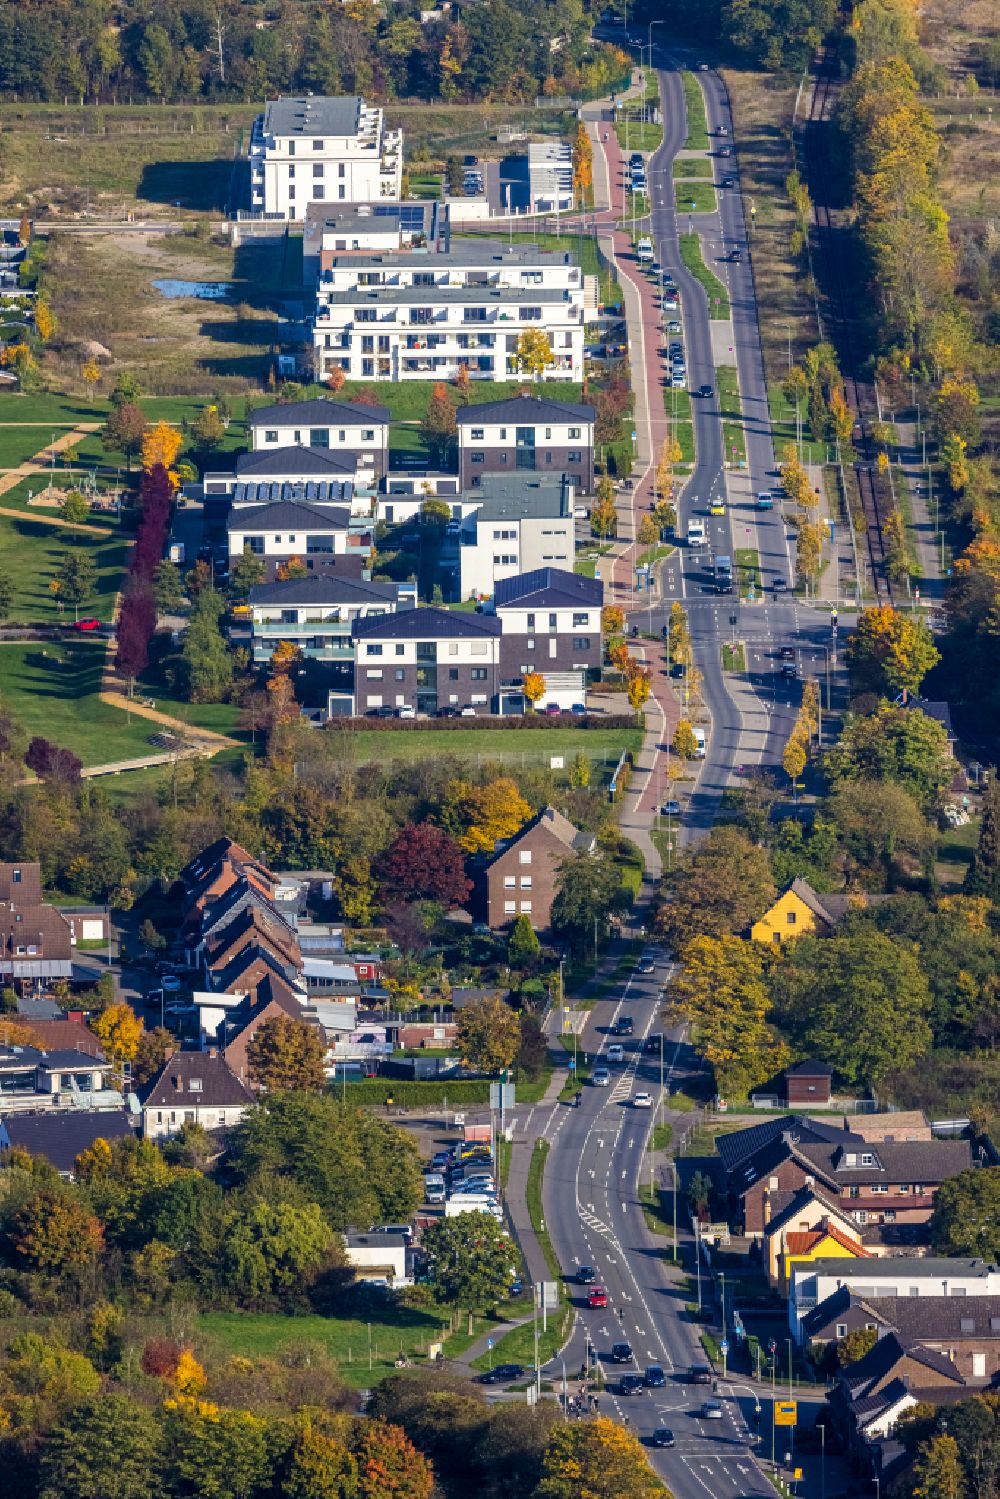 Aerial image Neukirchen-Vluyn - Single-family residential area Dicksche Heide in Neukirchen-Vluyn in the state of North Rhine-Westphalia